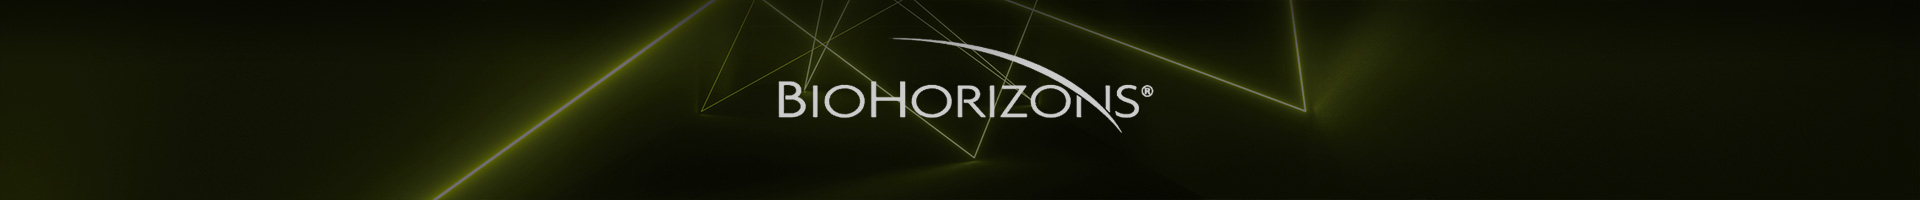 BioHorizons Internal®